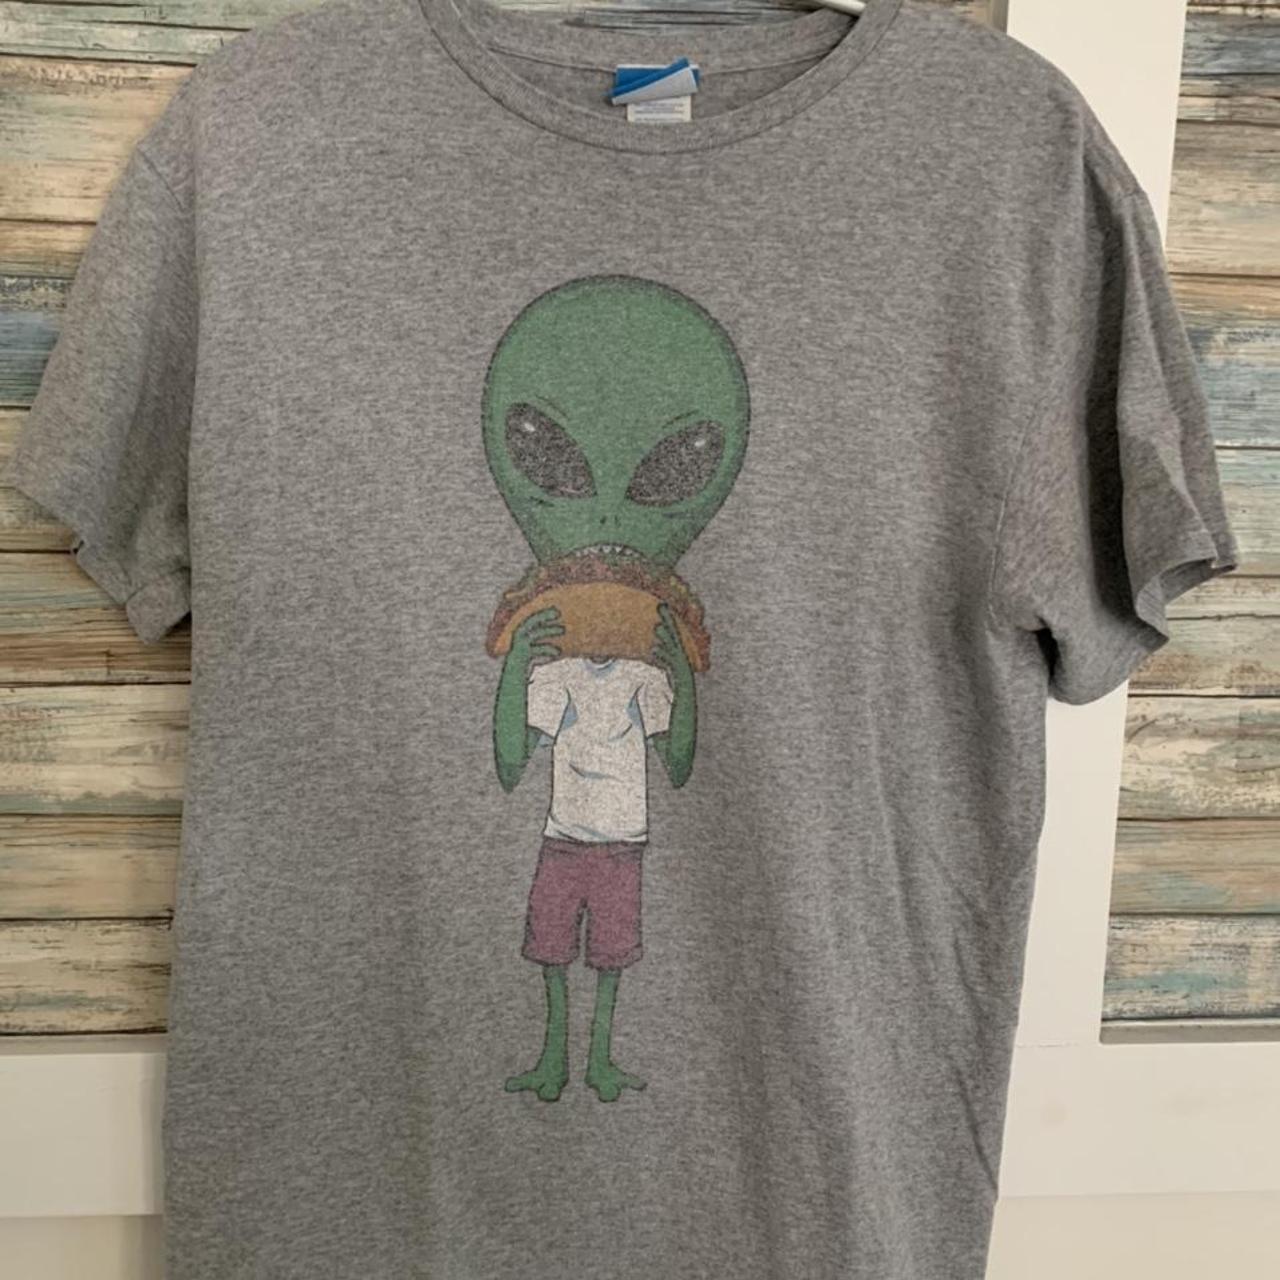 Product Image 1 - Vintage Alien t shirt 

Feel